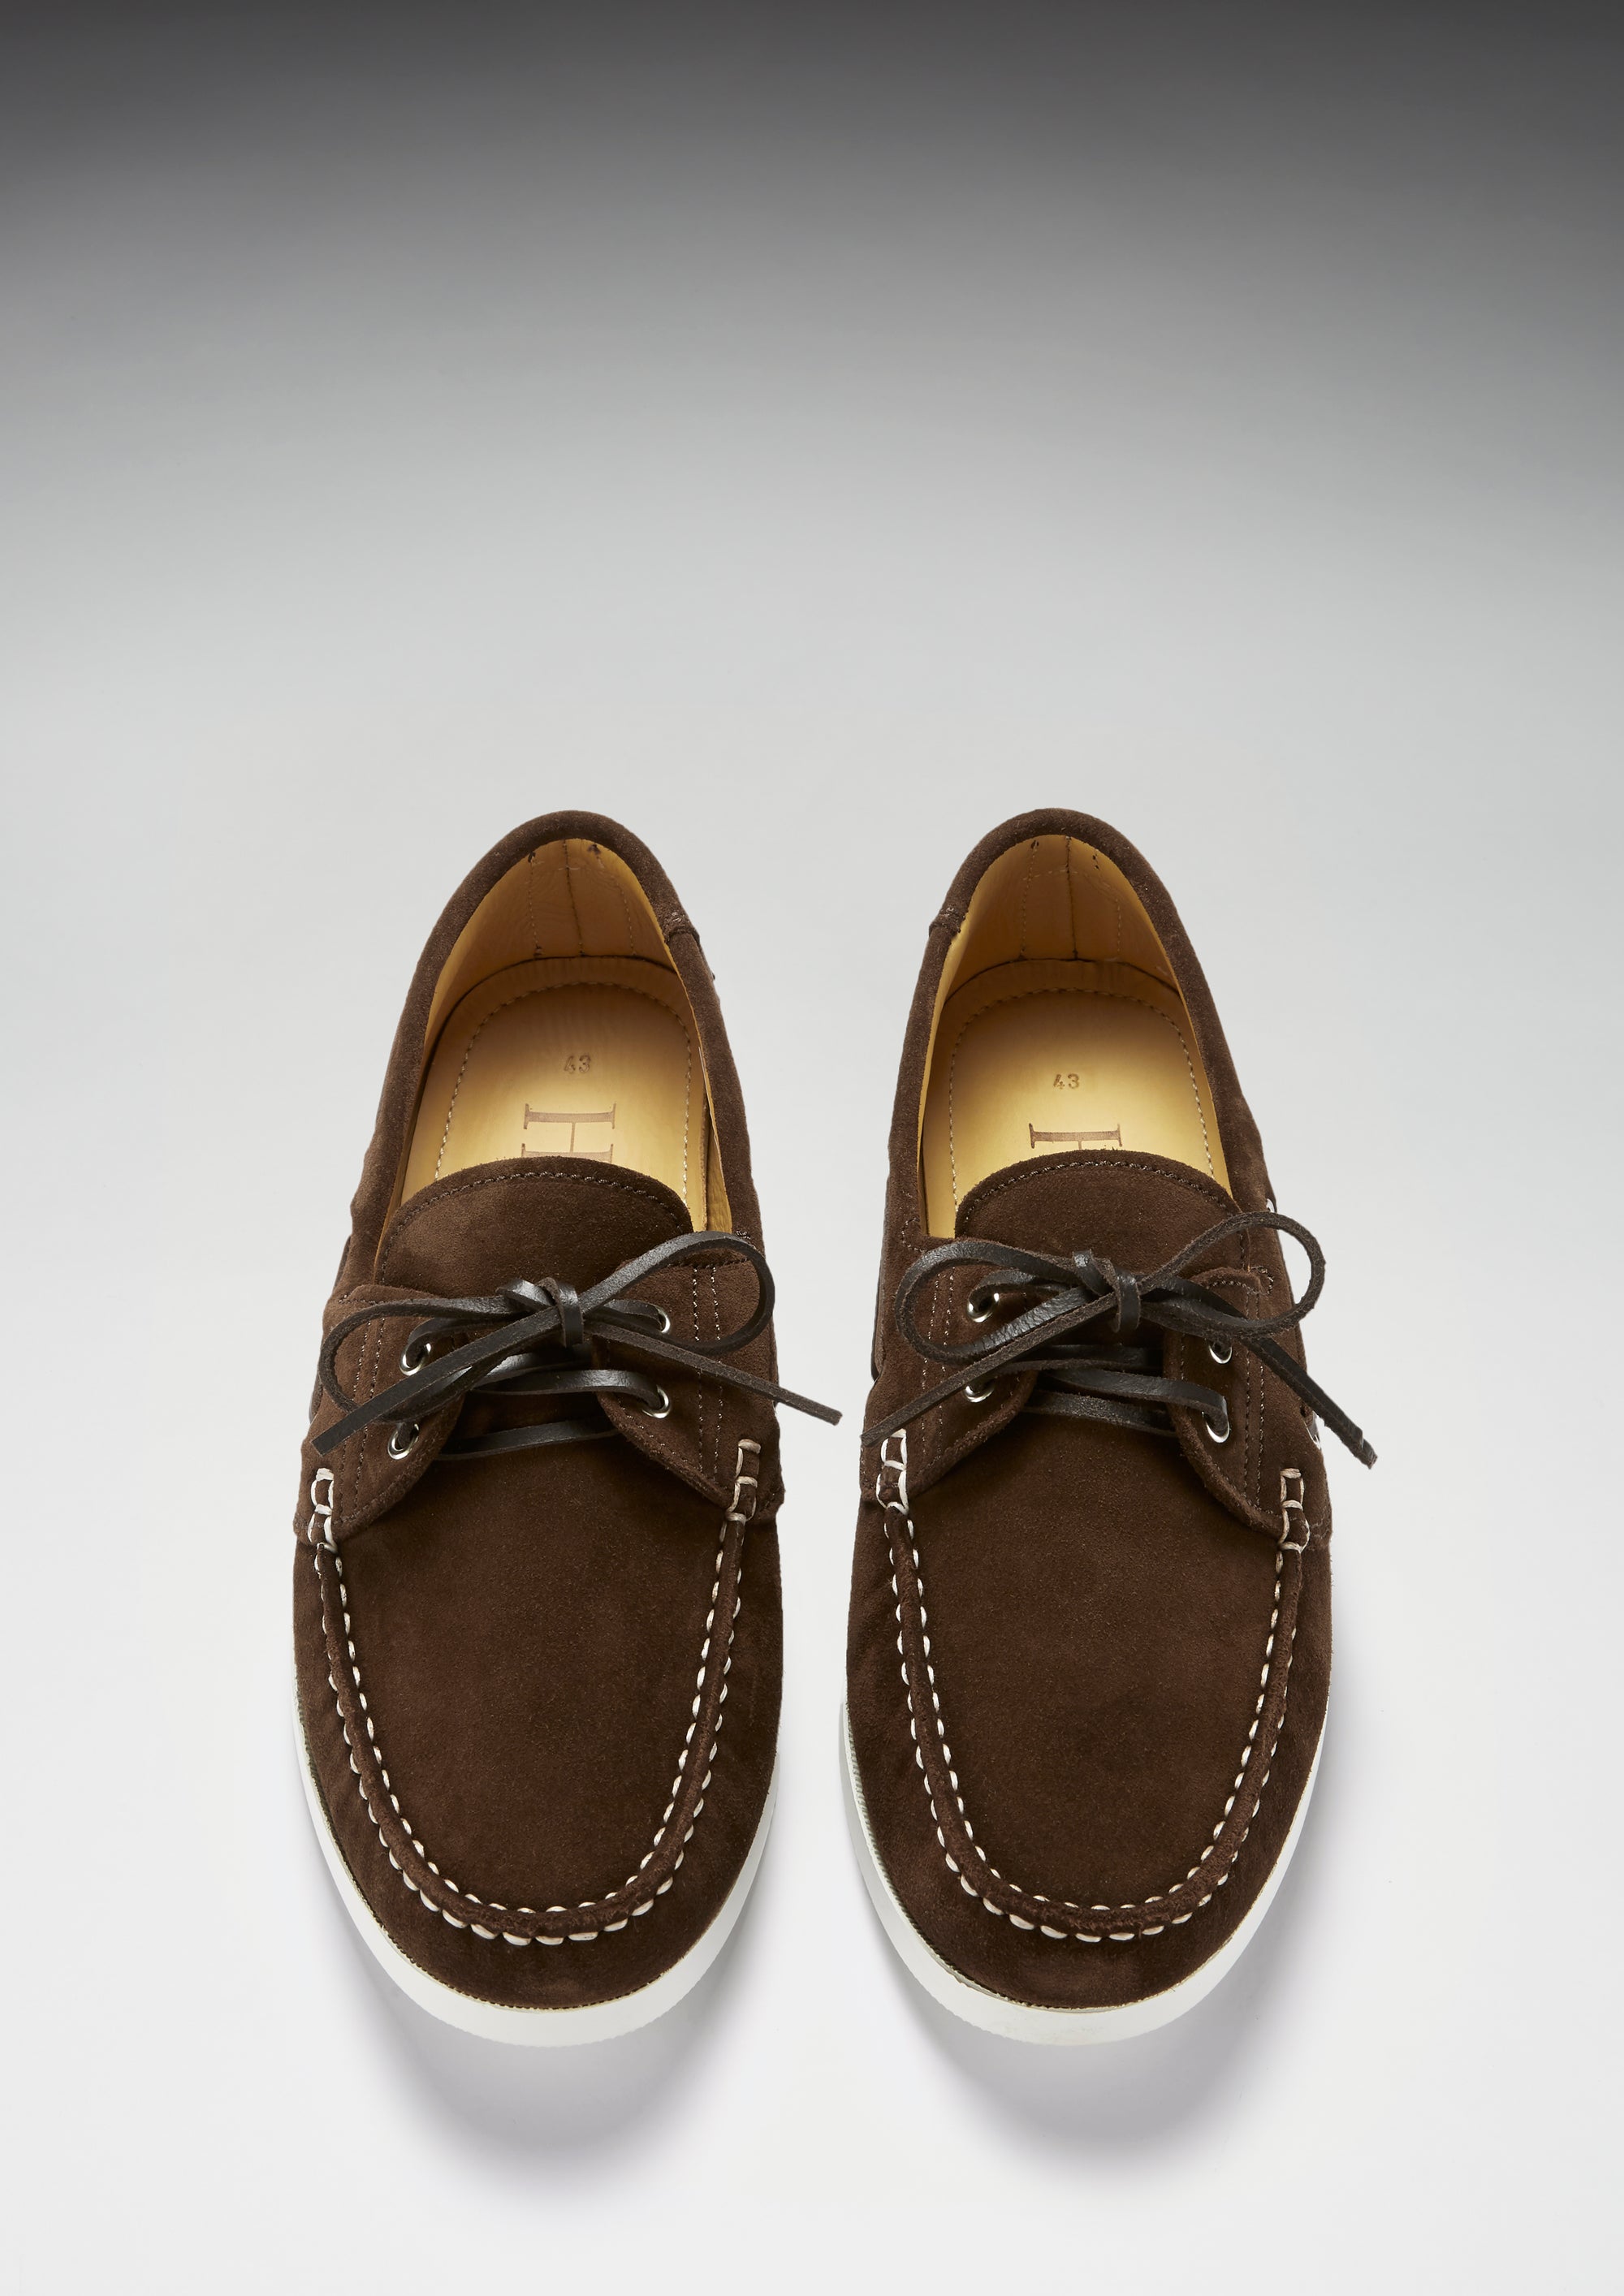 Deck Shoes, brown suede